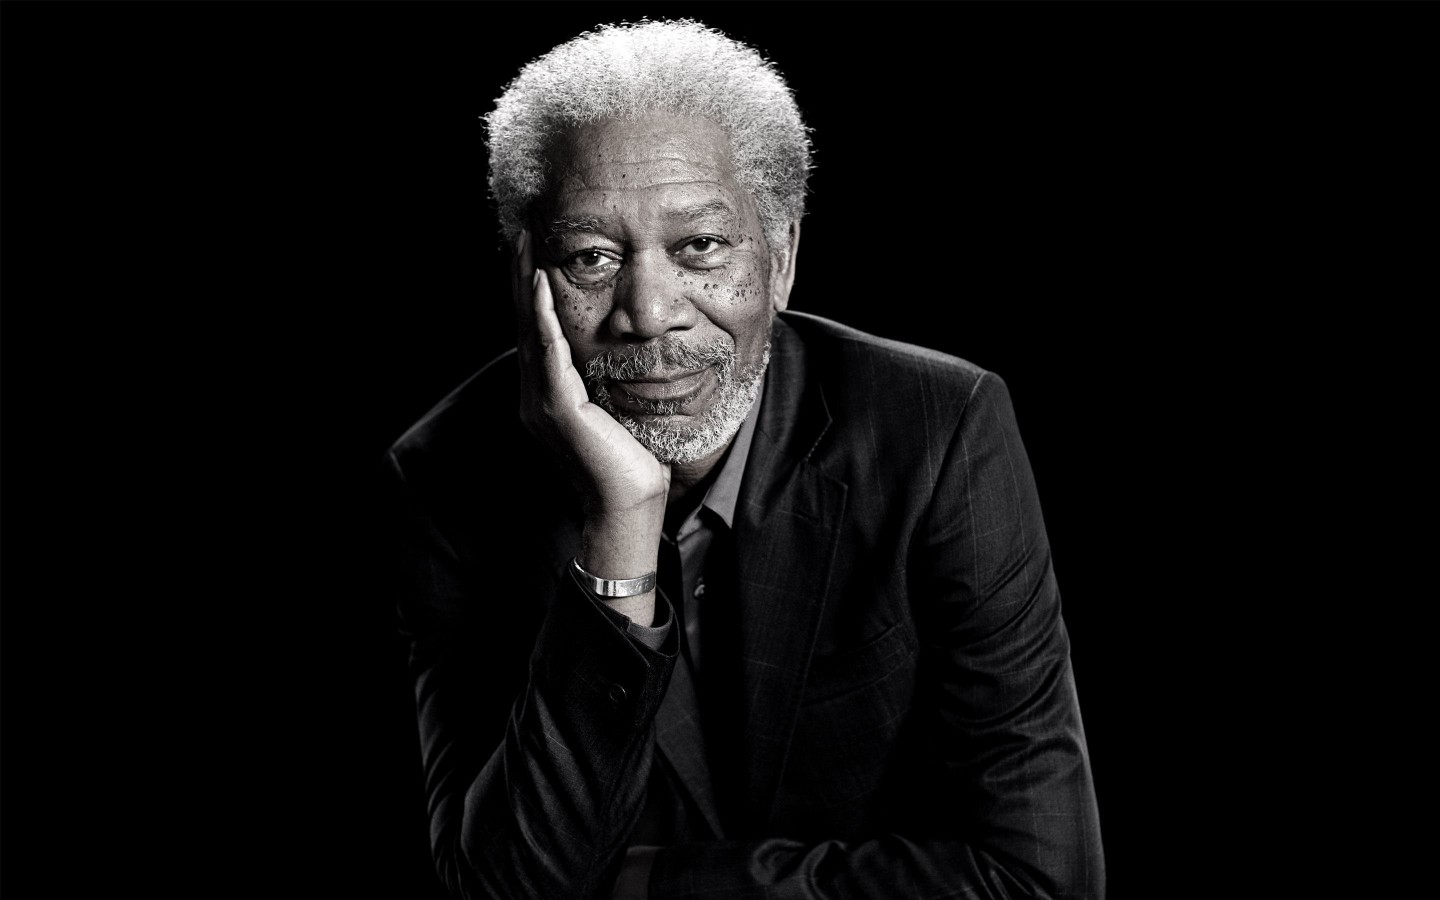 Morgan Freeman Portrait Wallpaper for Desktop 1440x900